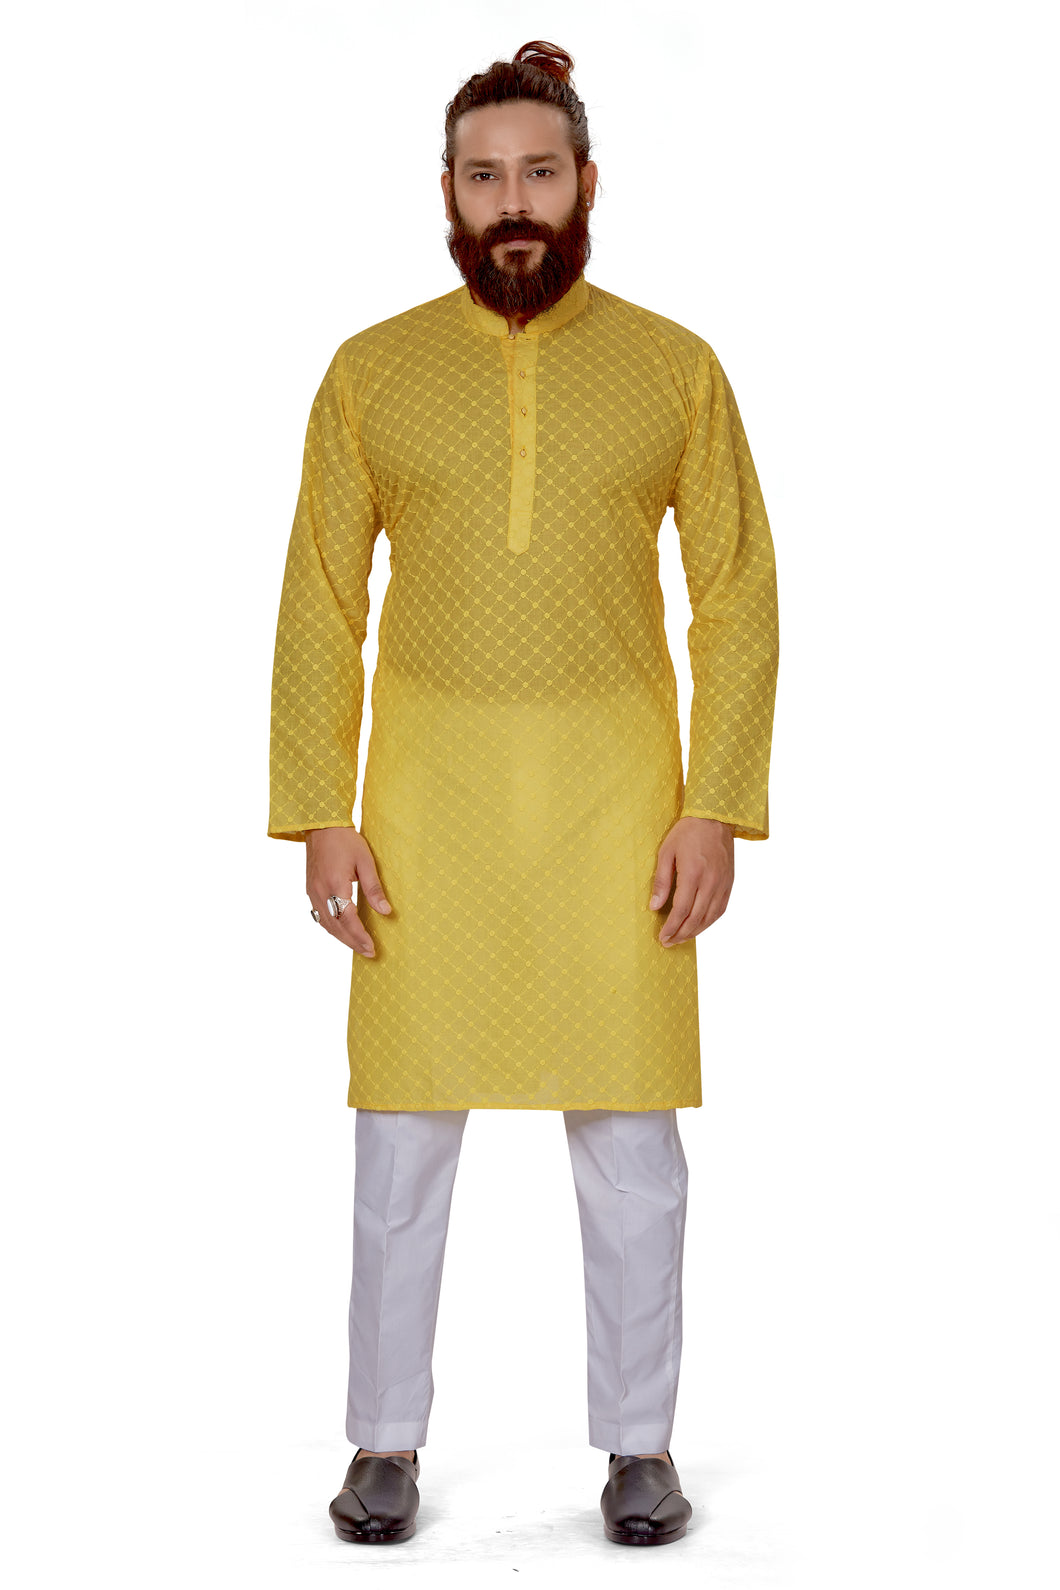 Ajay ArvindBhai Khatri Men's Pure Cotton Chakan Embroidery kurta Yellow Color